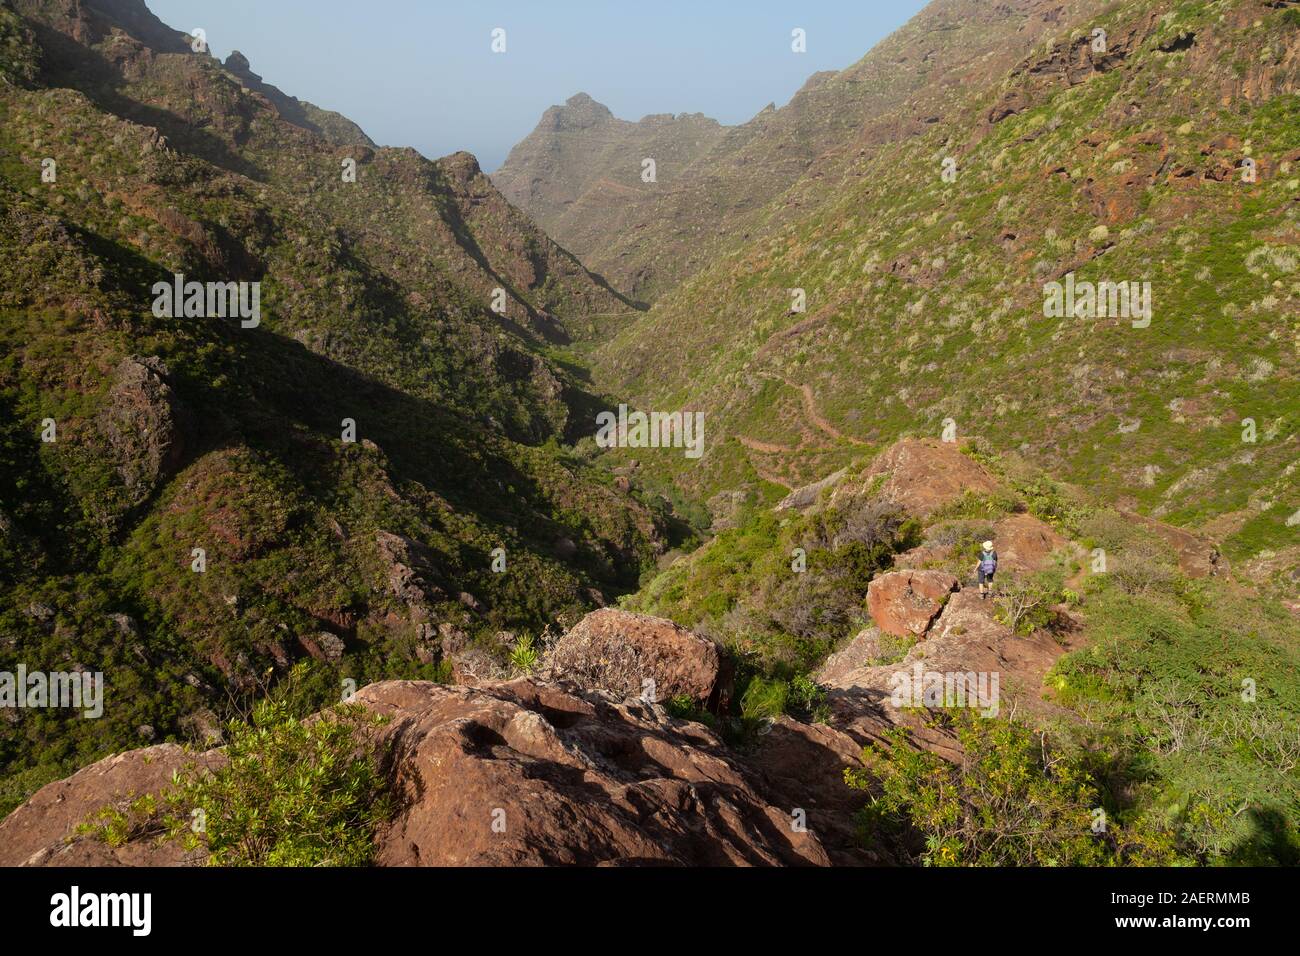 The Valley back from Los Batanes to Punta del Hidalgo, Tenerife. Stock Photo